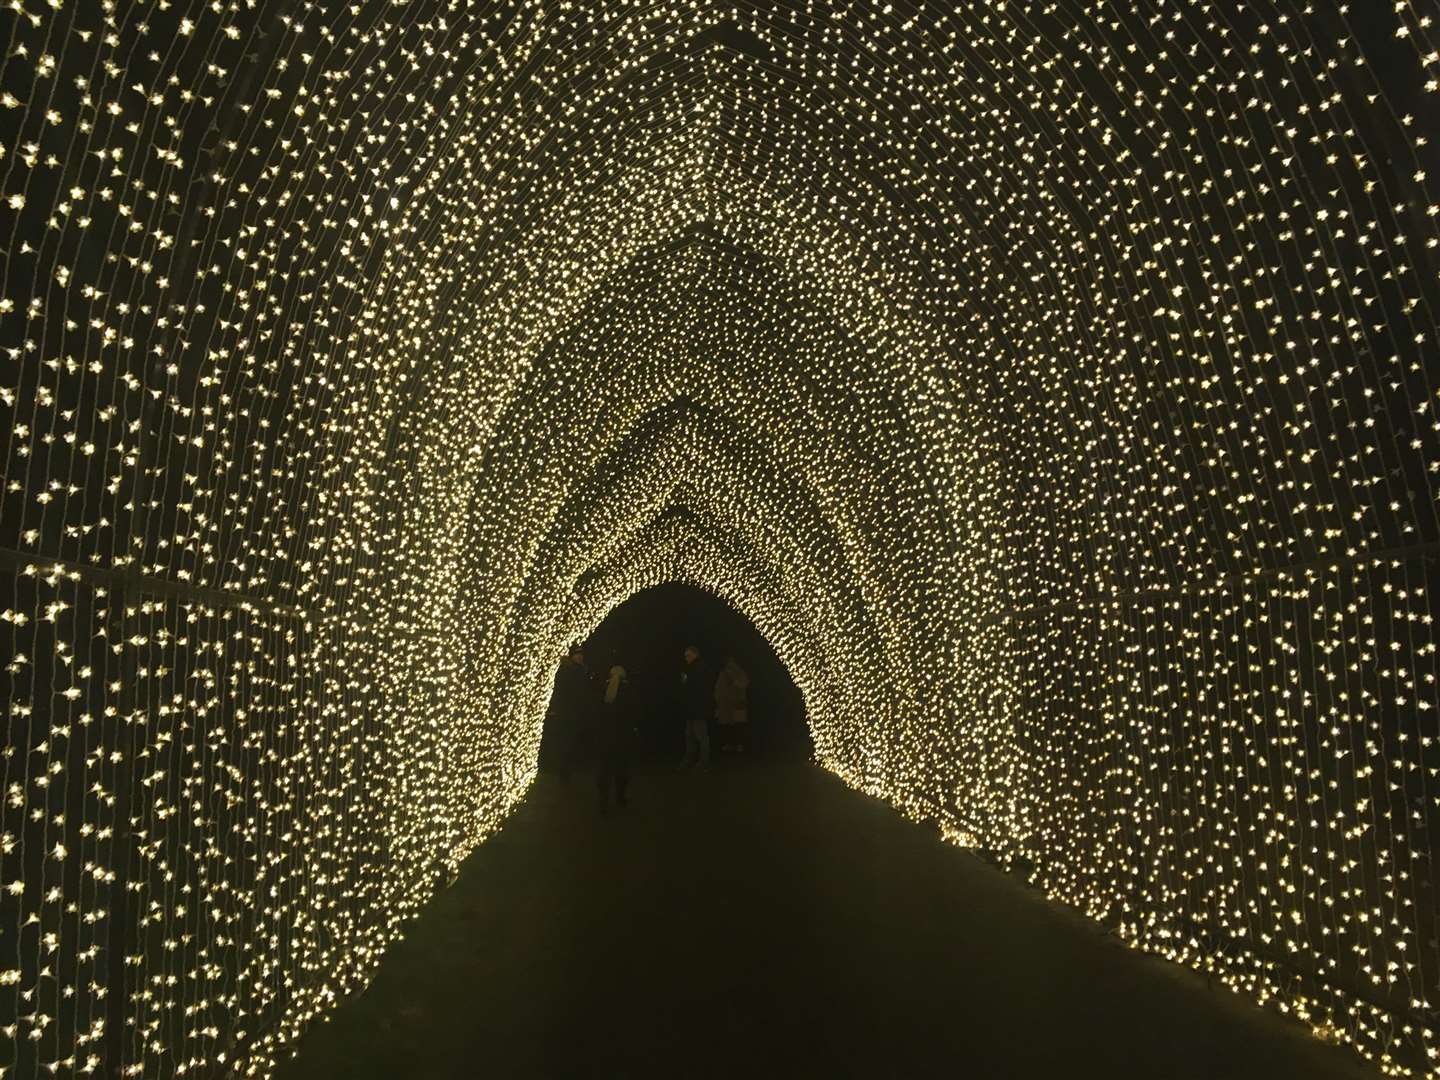 Some 100,000 bulbs illuminate the Tunnel of Light